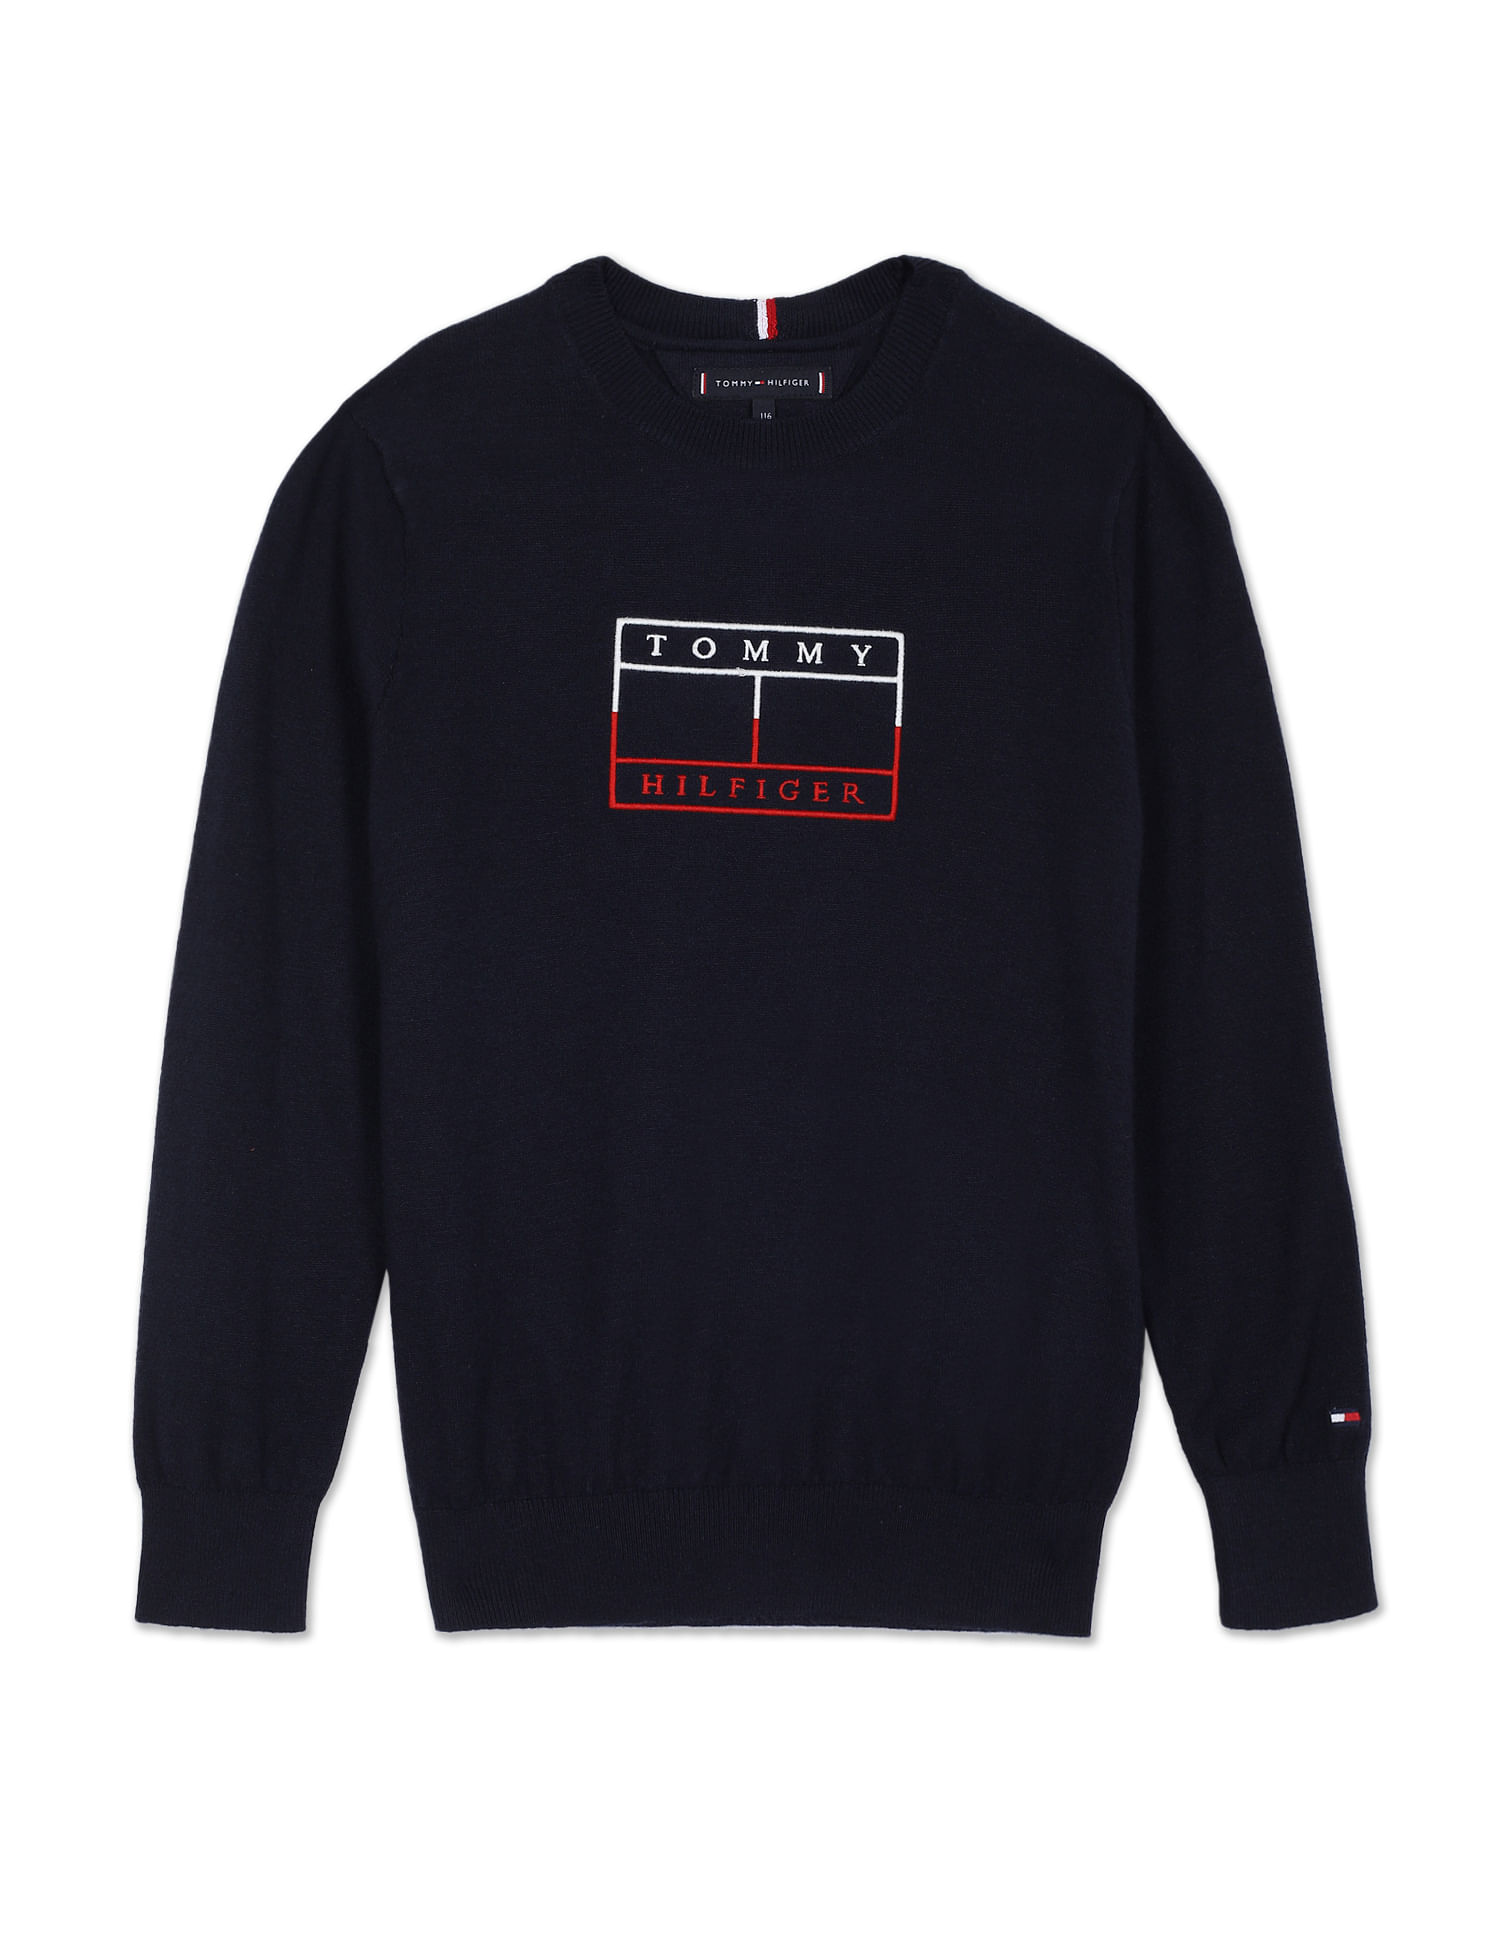 Buy Tommy Hilfiger Kids Boys Grey Flag Embroidered Sweatshirt